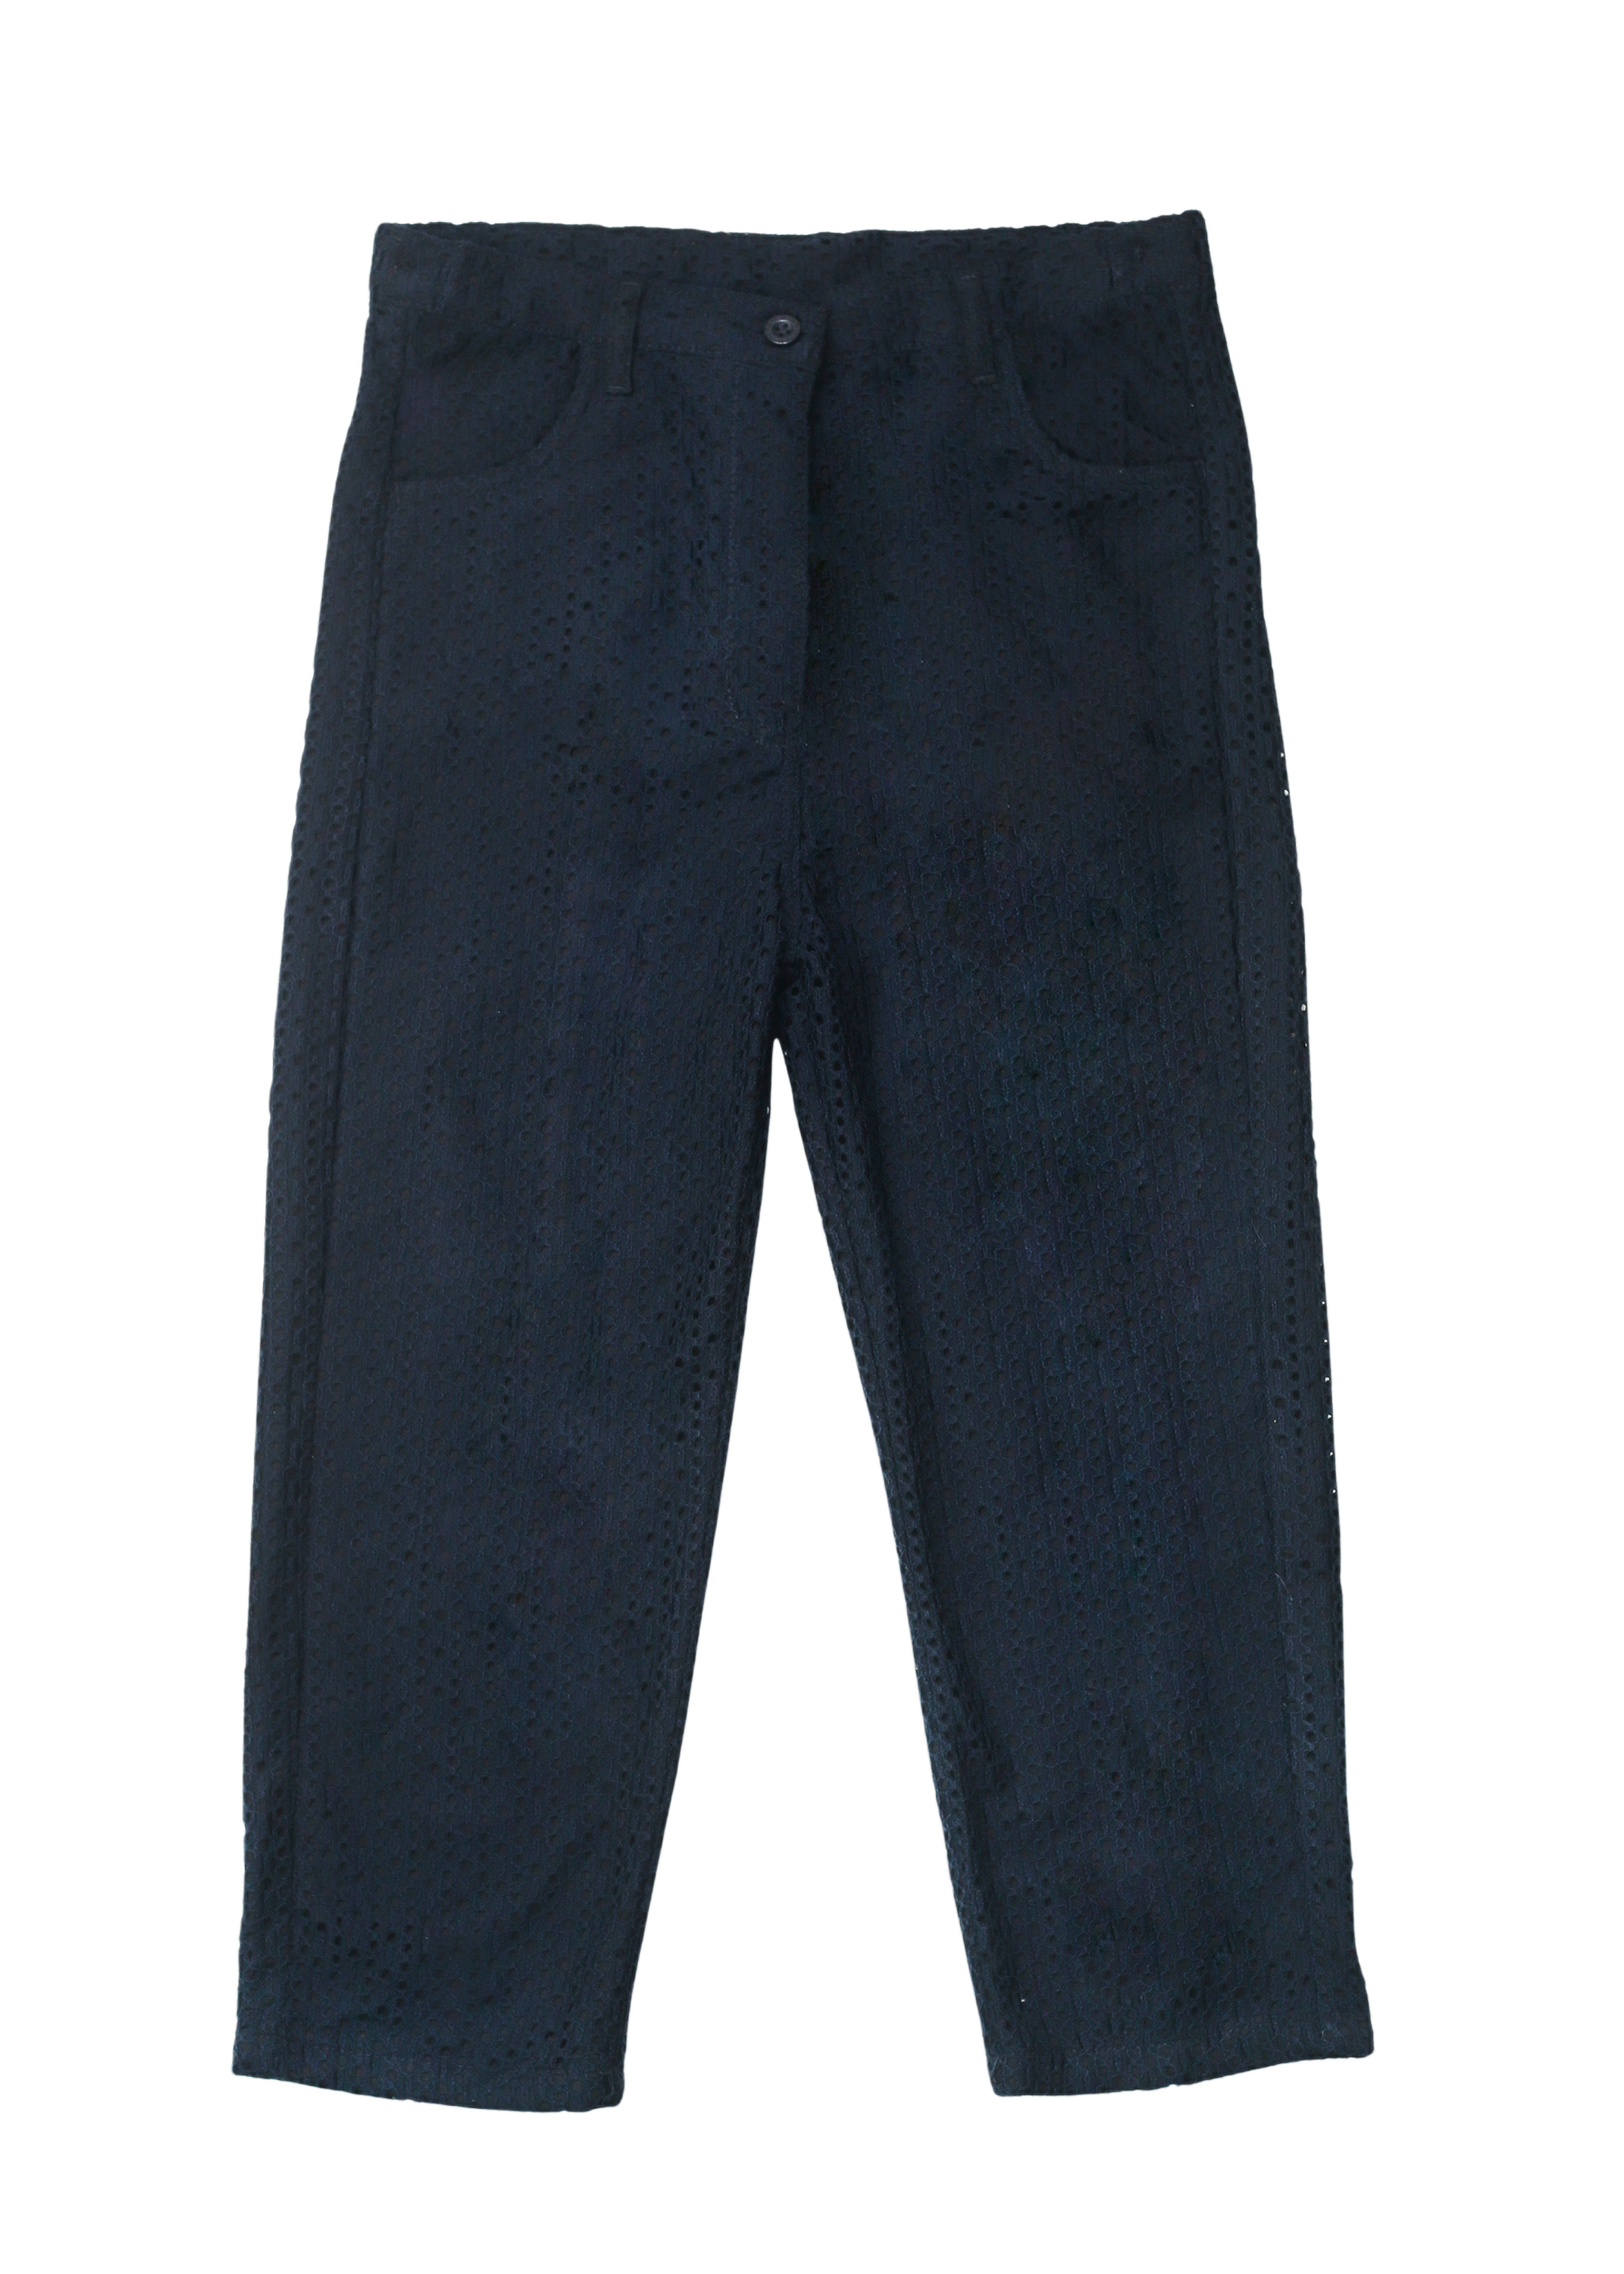 Embellished Top & Capri Pants (MMB-C34)